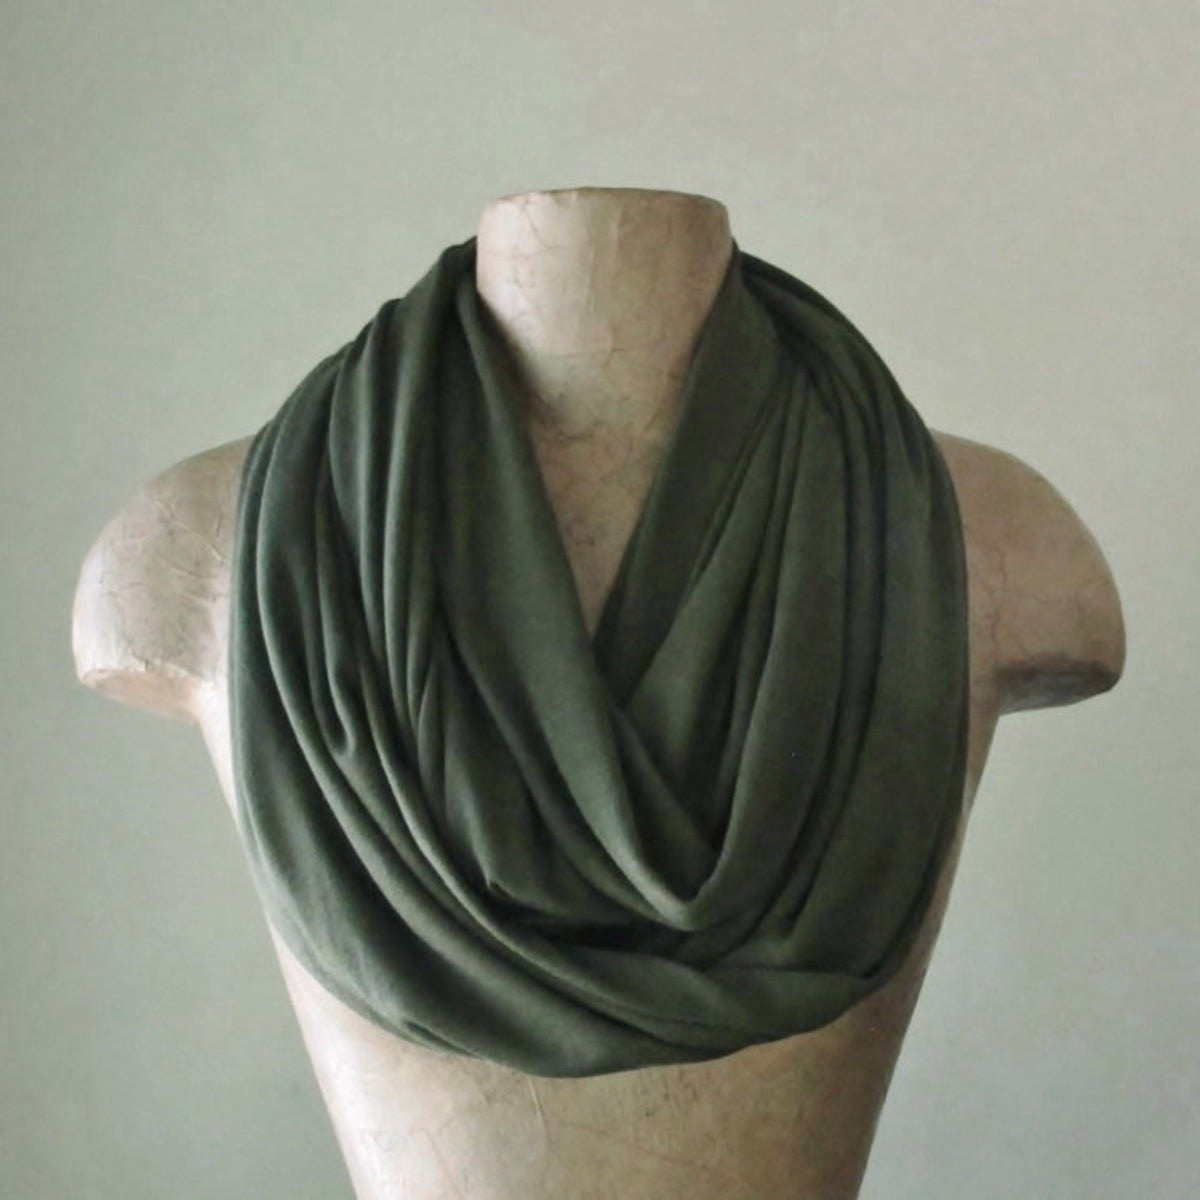 olive drab ecoshag jersey knit infinity scarf